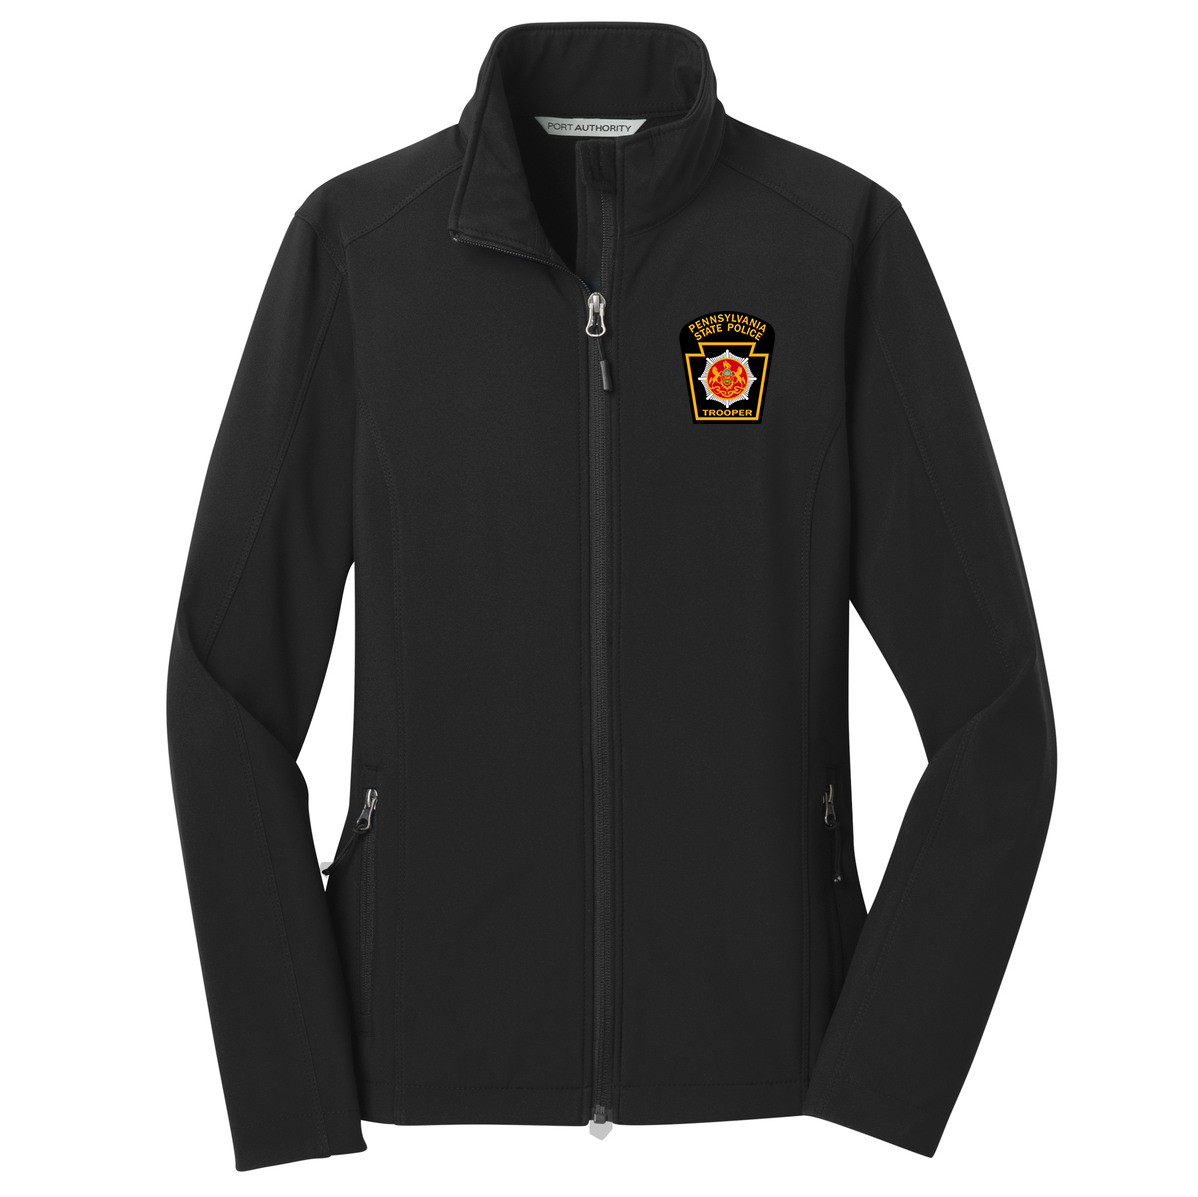 PA State Police Women's Soft Shell Jacket